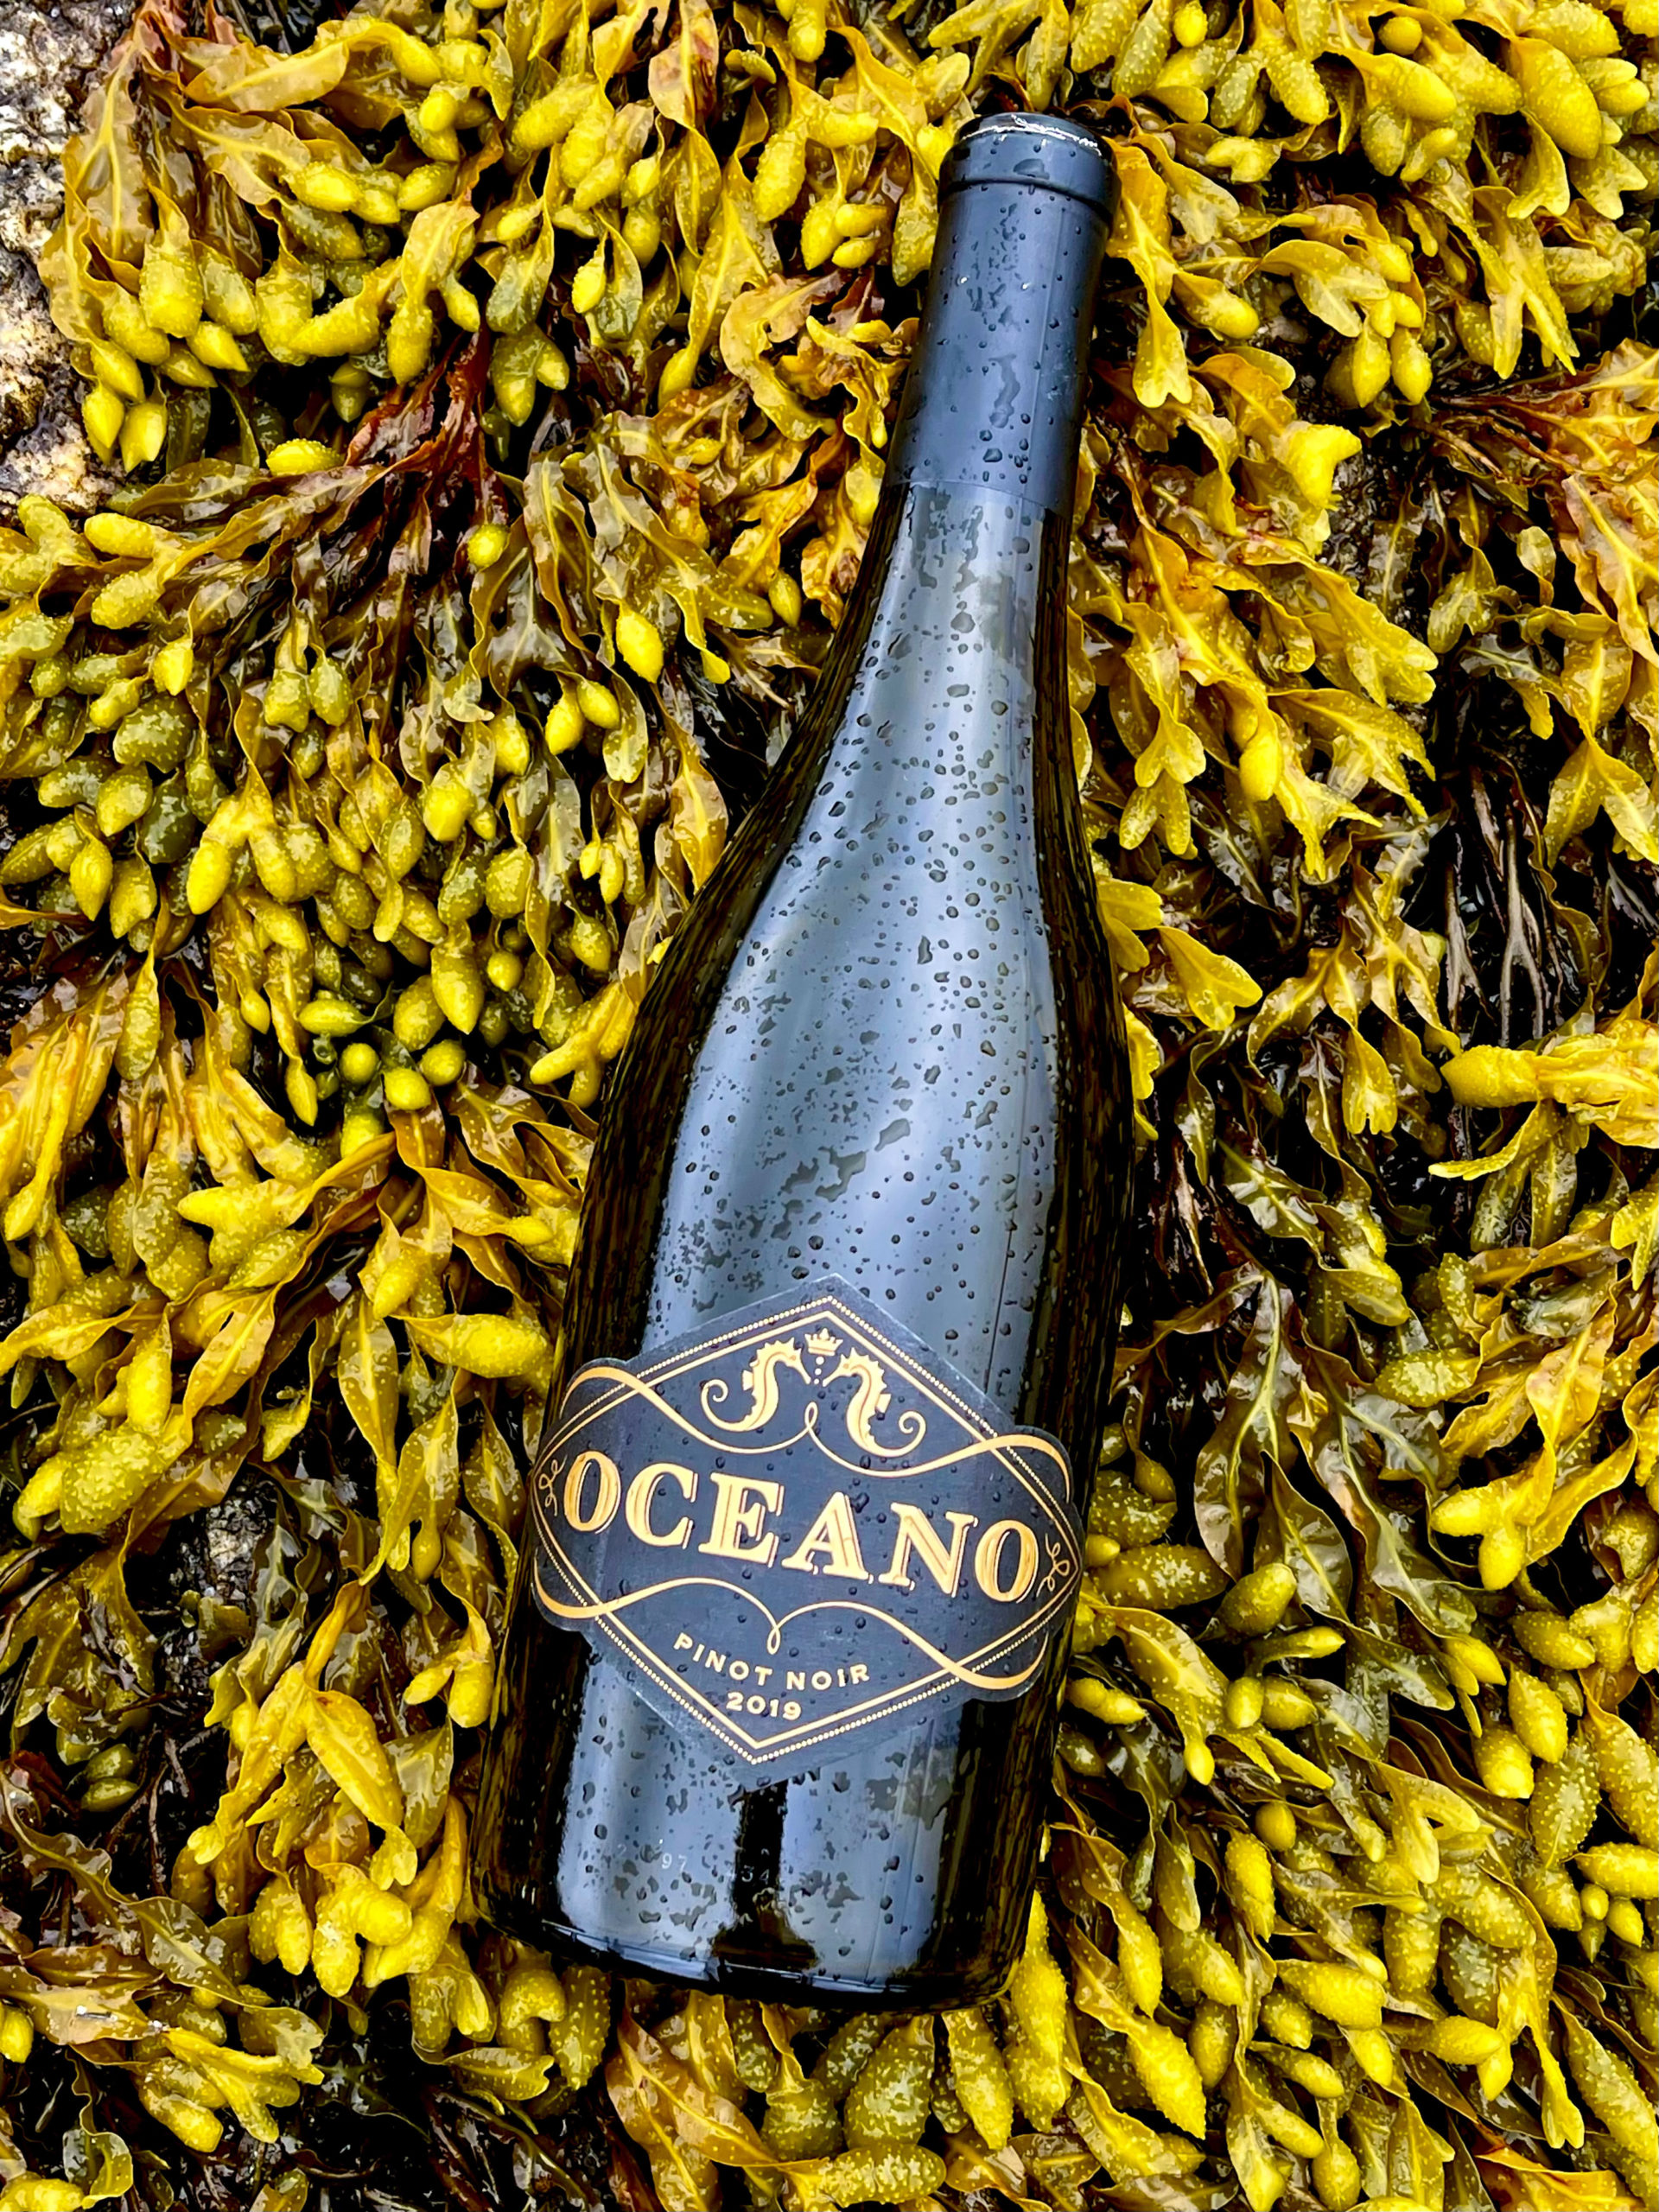 Chilled Oceano Pinot Noir bottle laid on sea kelp